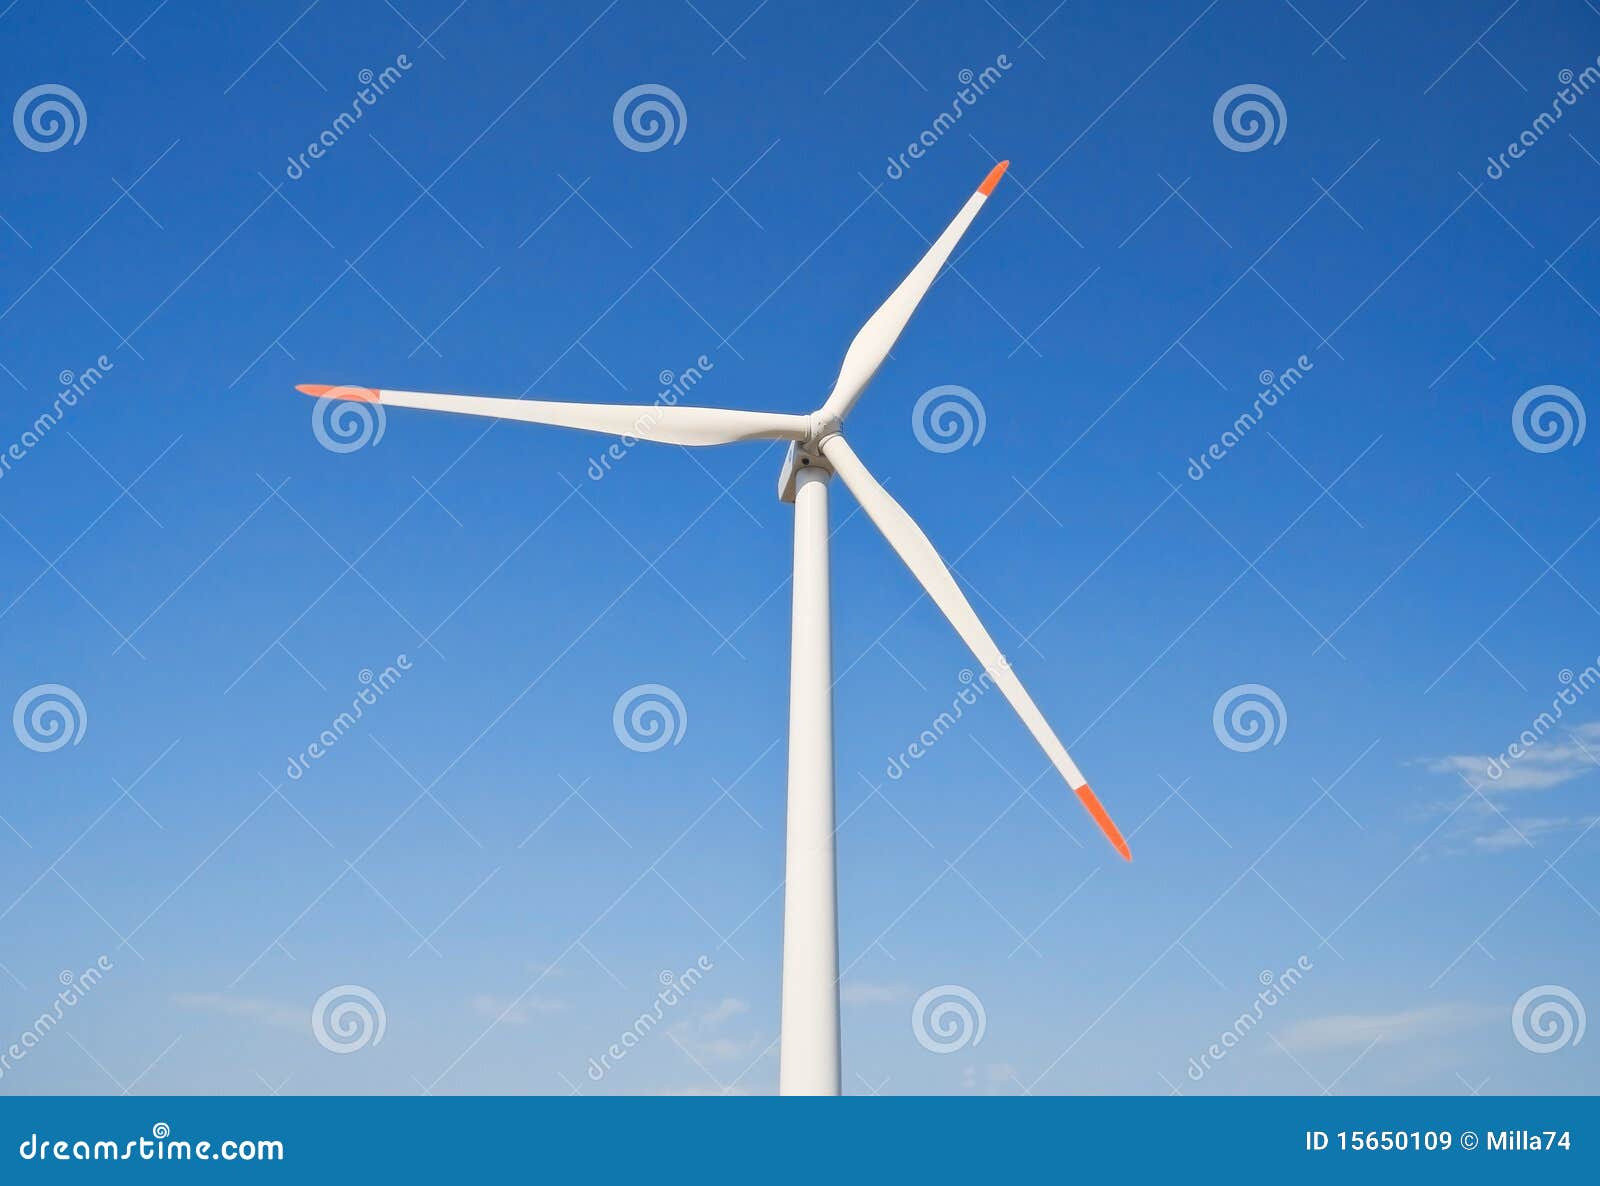 Wind Turbine Blade. Royalty Free Stock Images - Image: 15650109